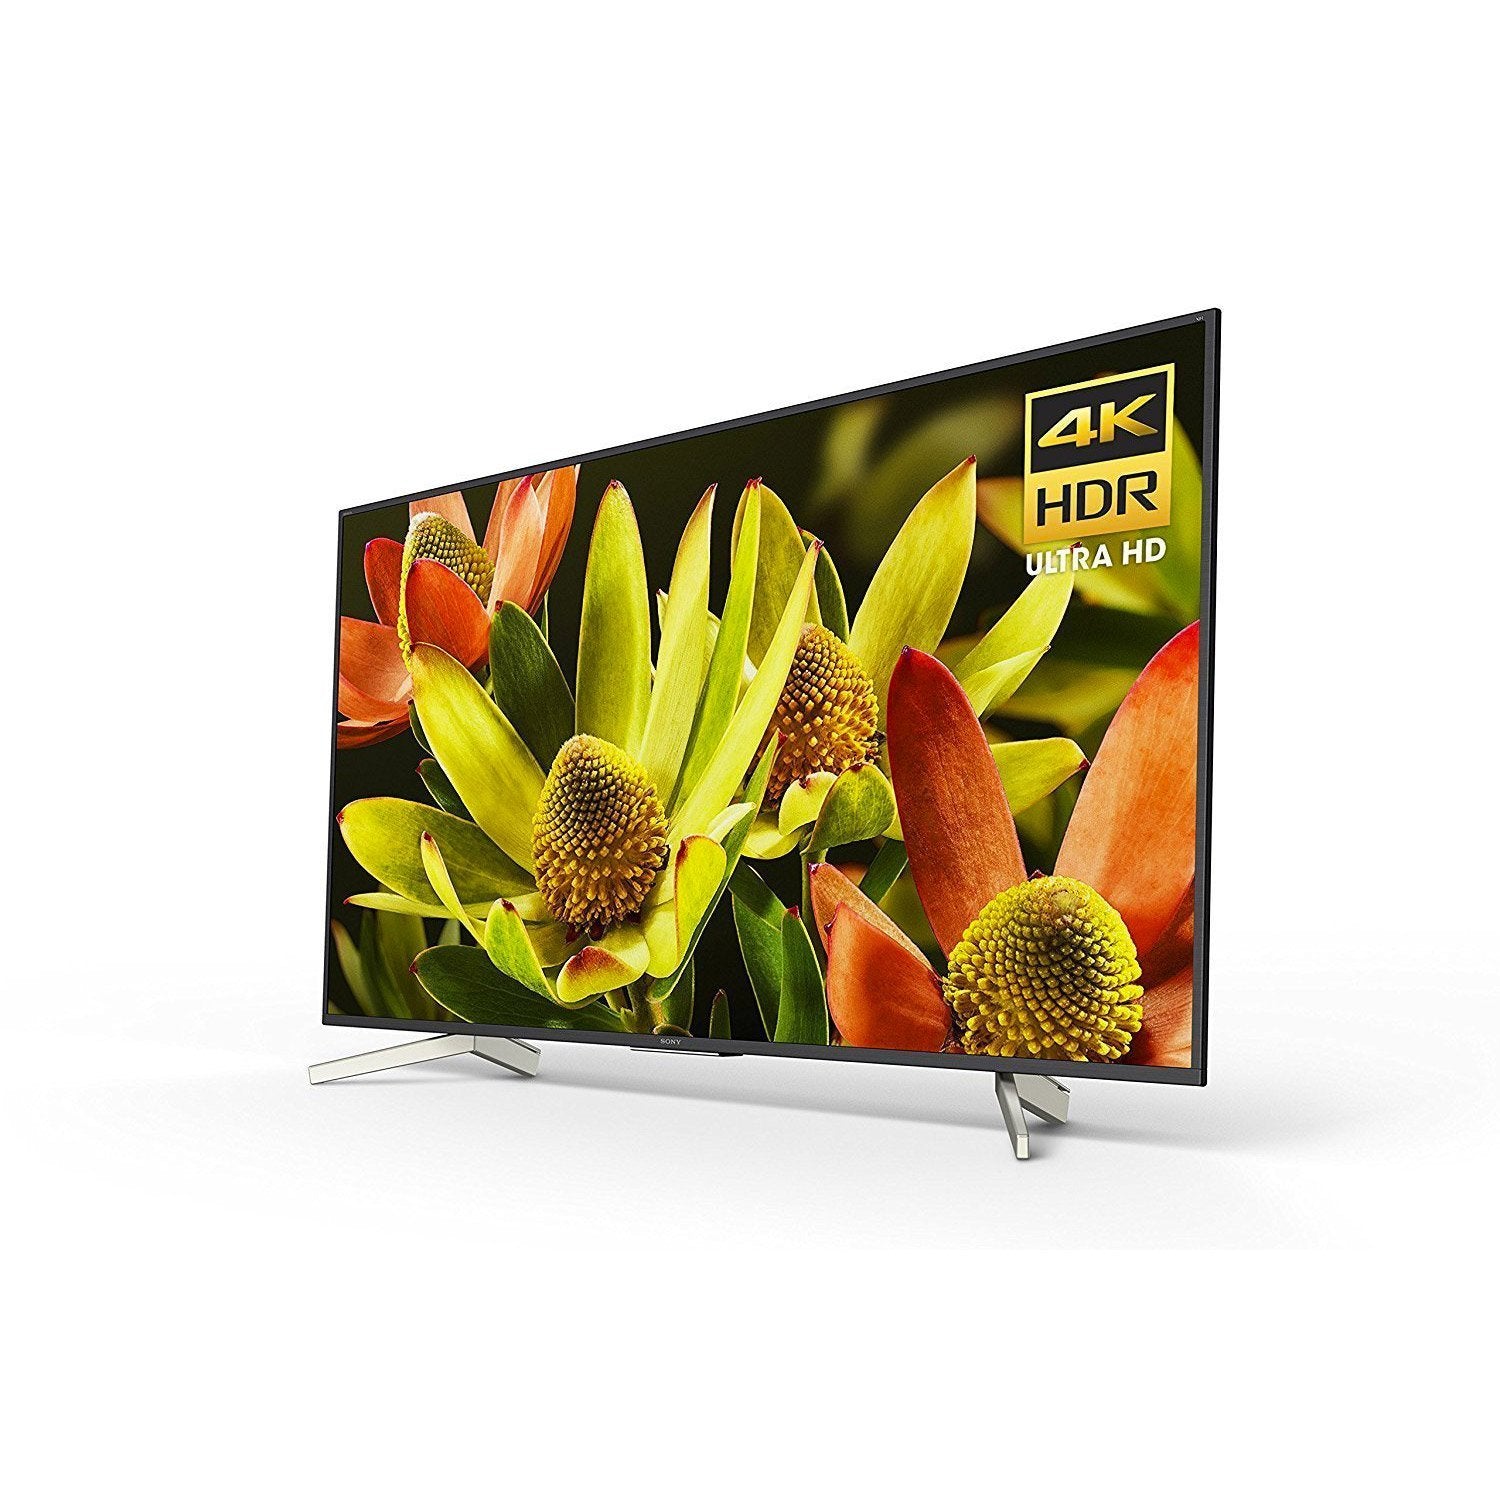 Sony XBR-70X830F 70-Inch 4K Ultra HD Smart LED TV